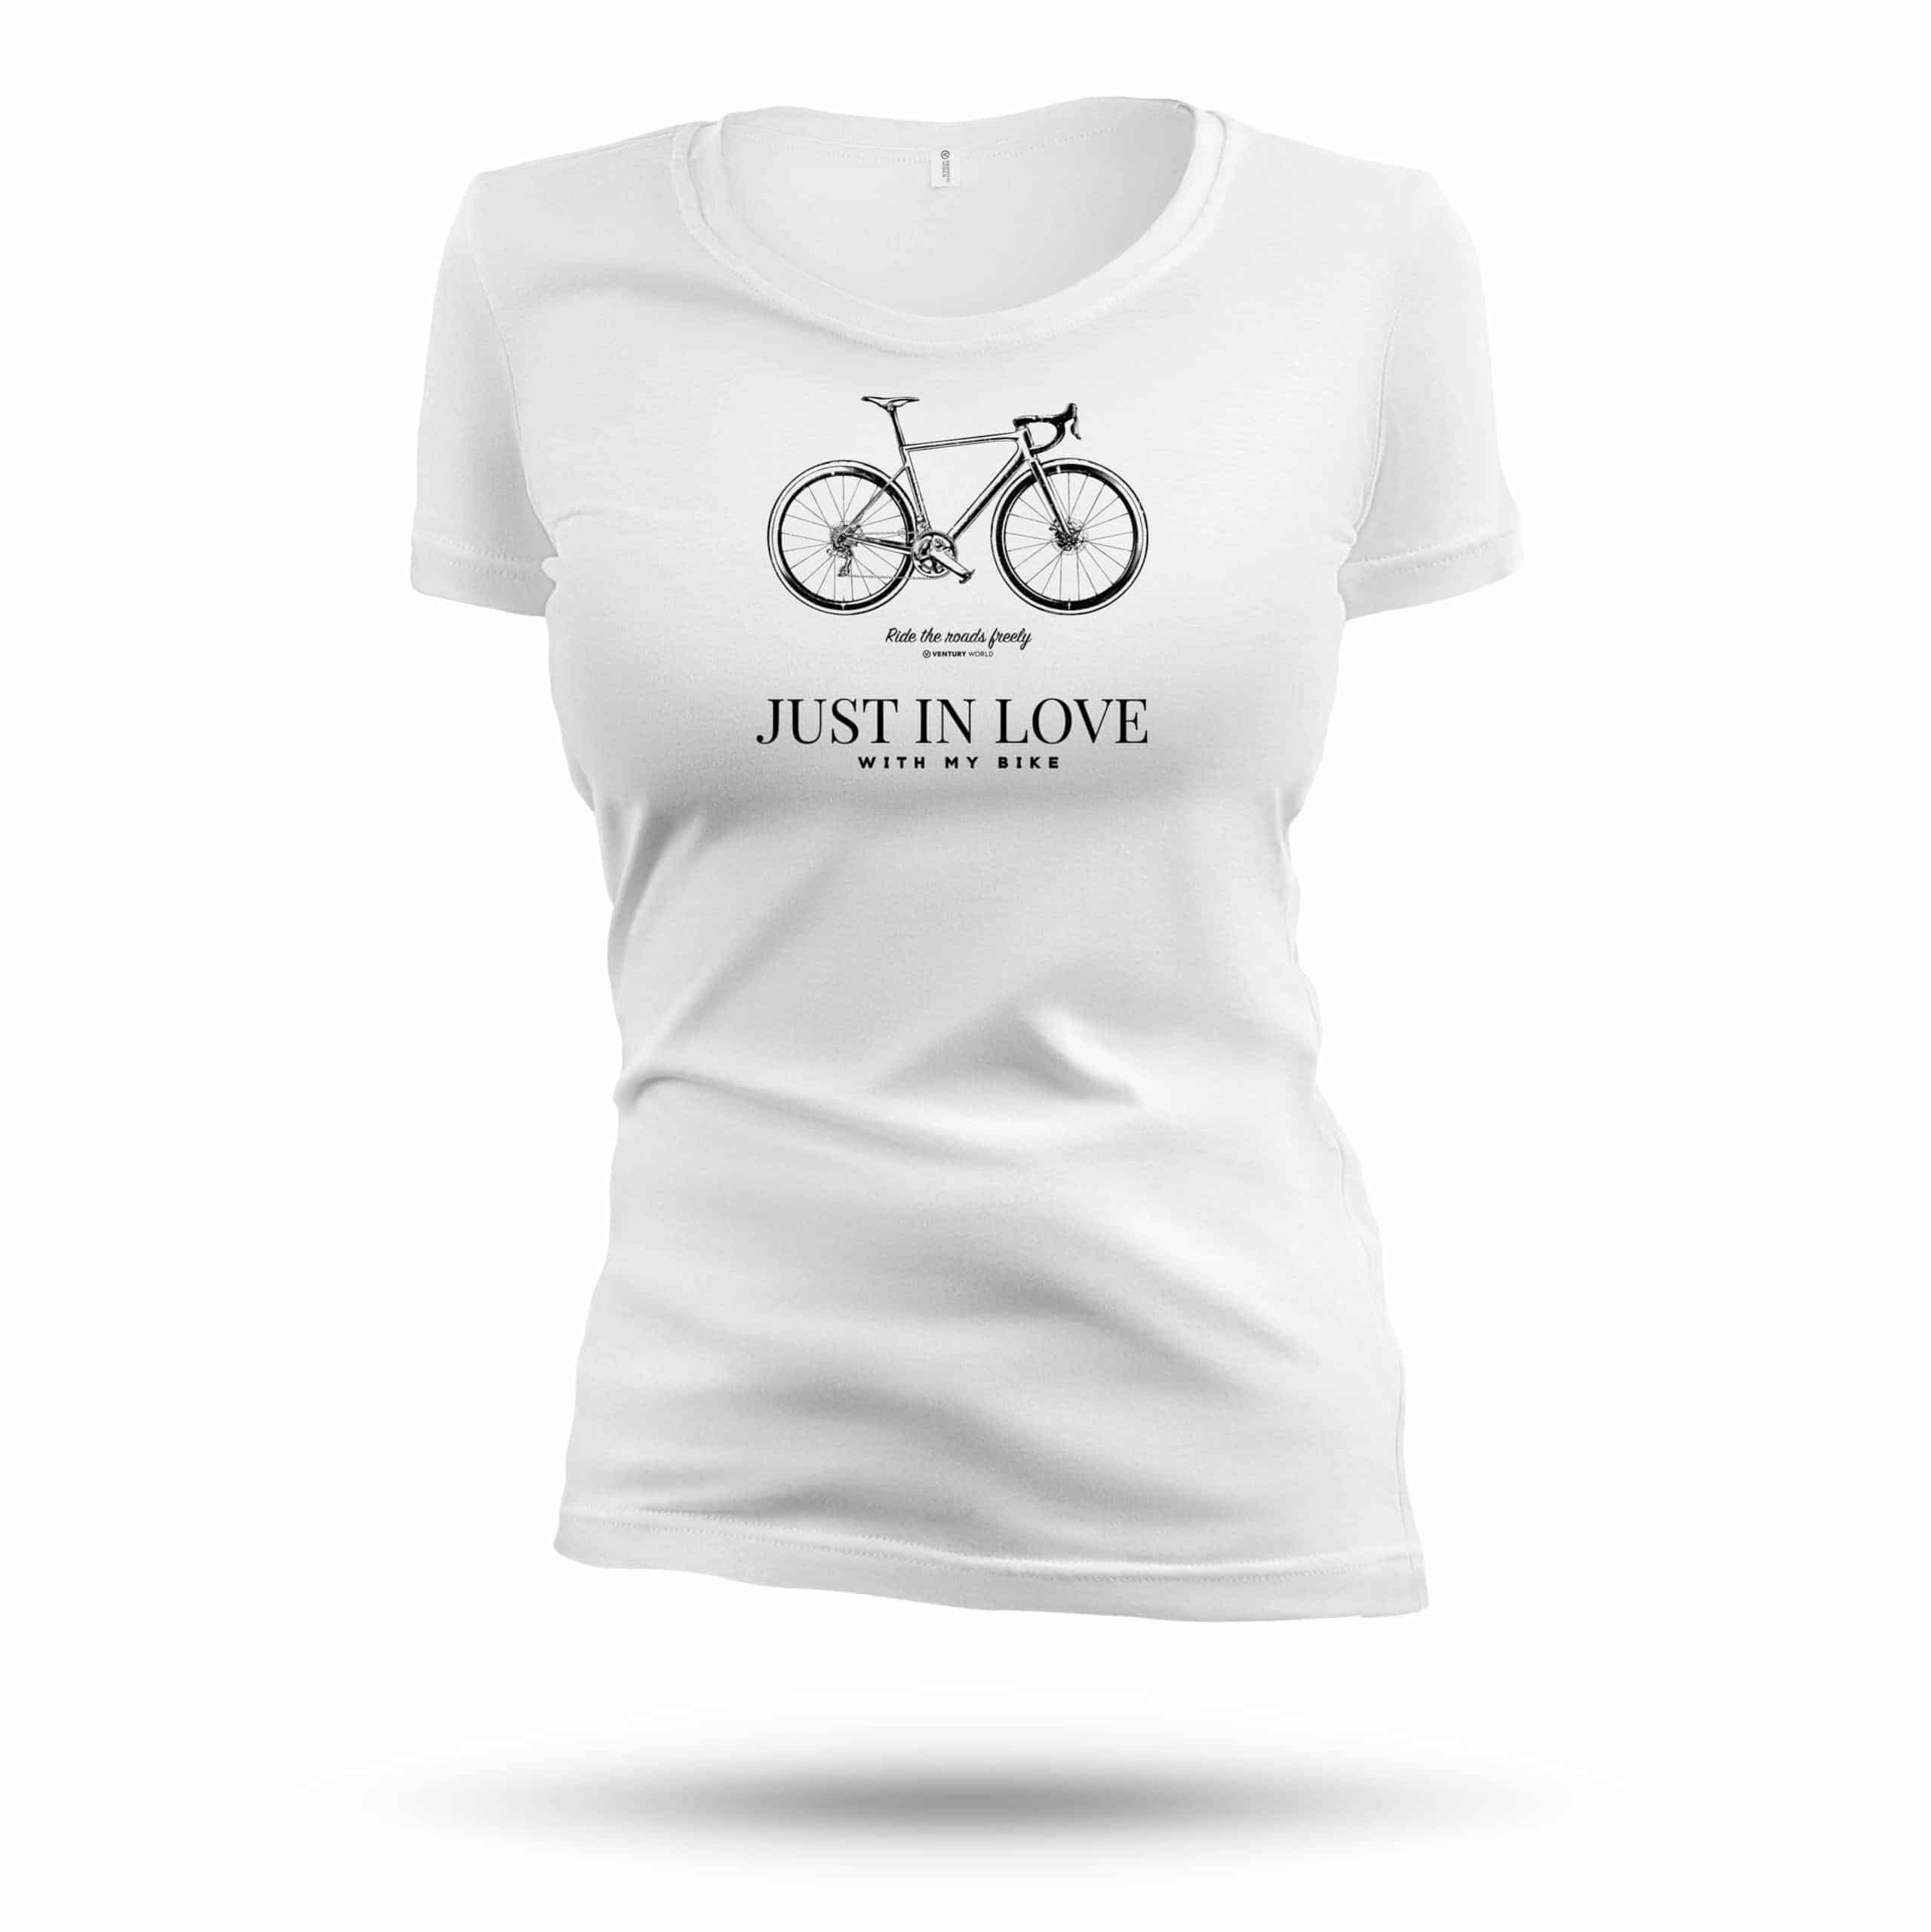 T-shirt cycling femme - Race Bike - Ride the roads freely - collection Live Freely femme 100% Naturel de grande qualité - taille ajusté grand col rond .